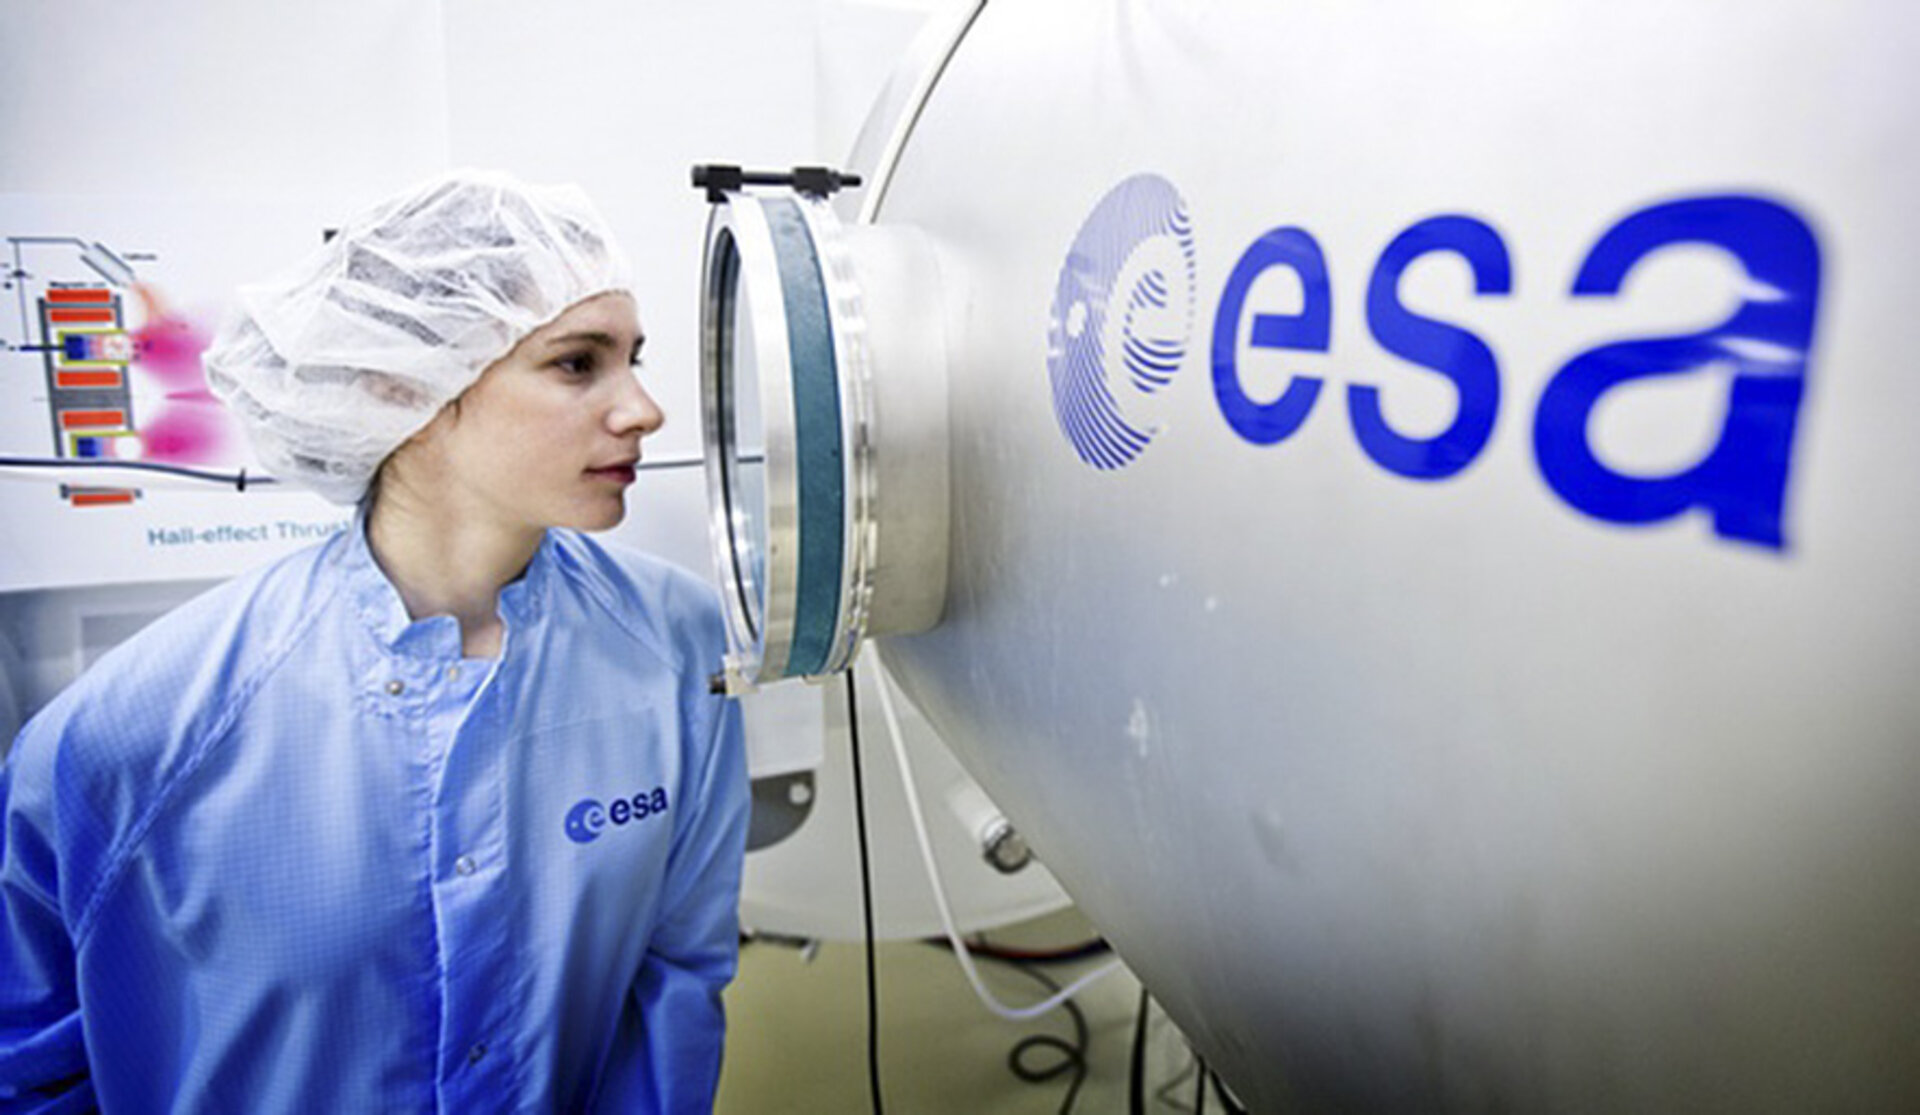 Advanced spacecraft thrusters under test in vacuum chamber at ESTEC